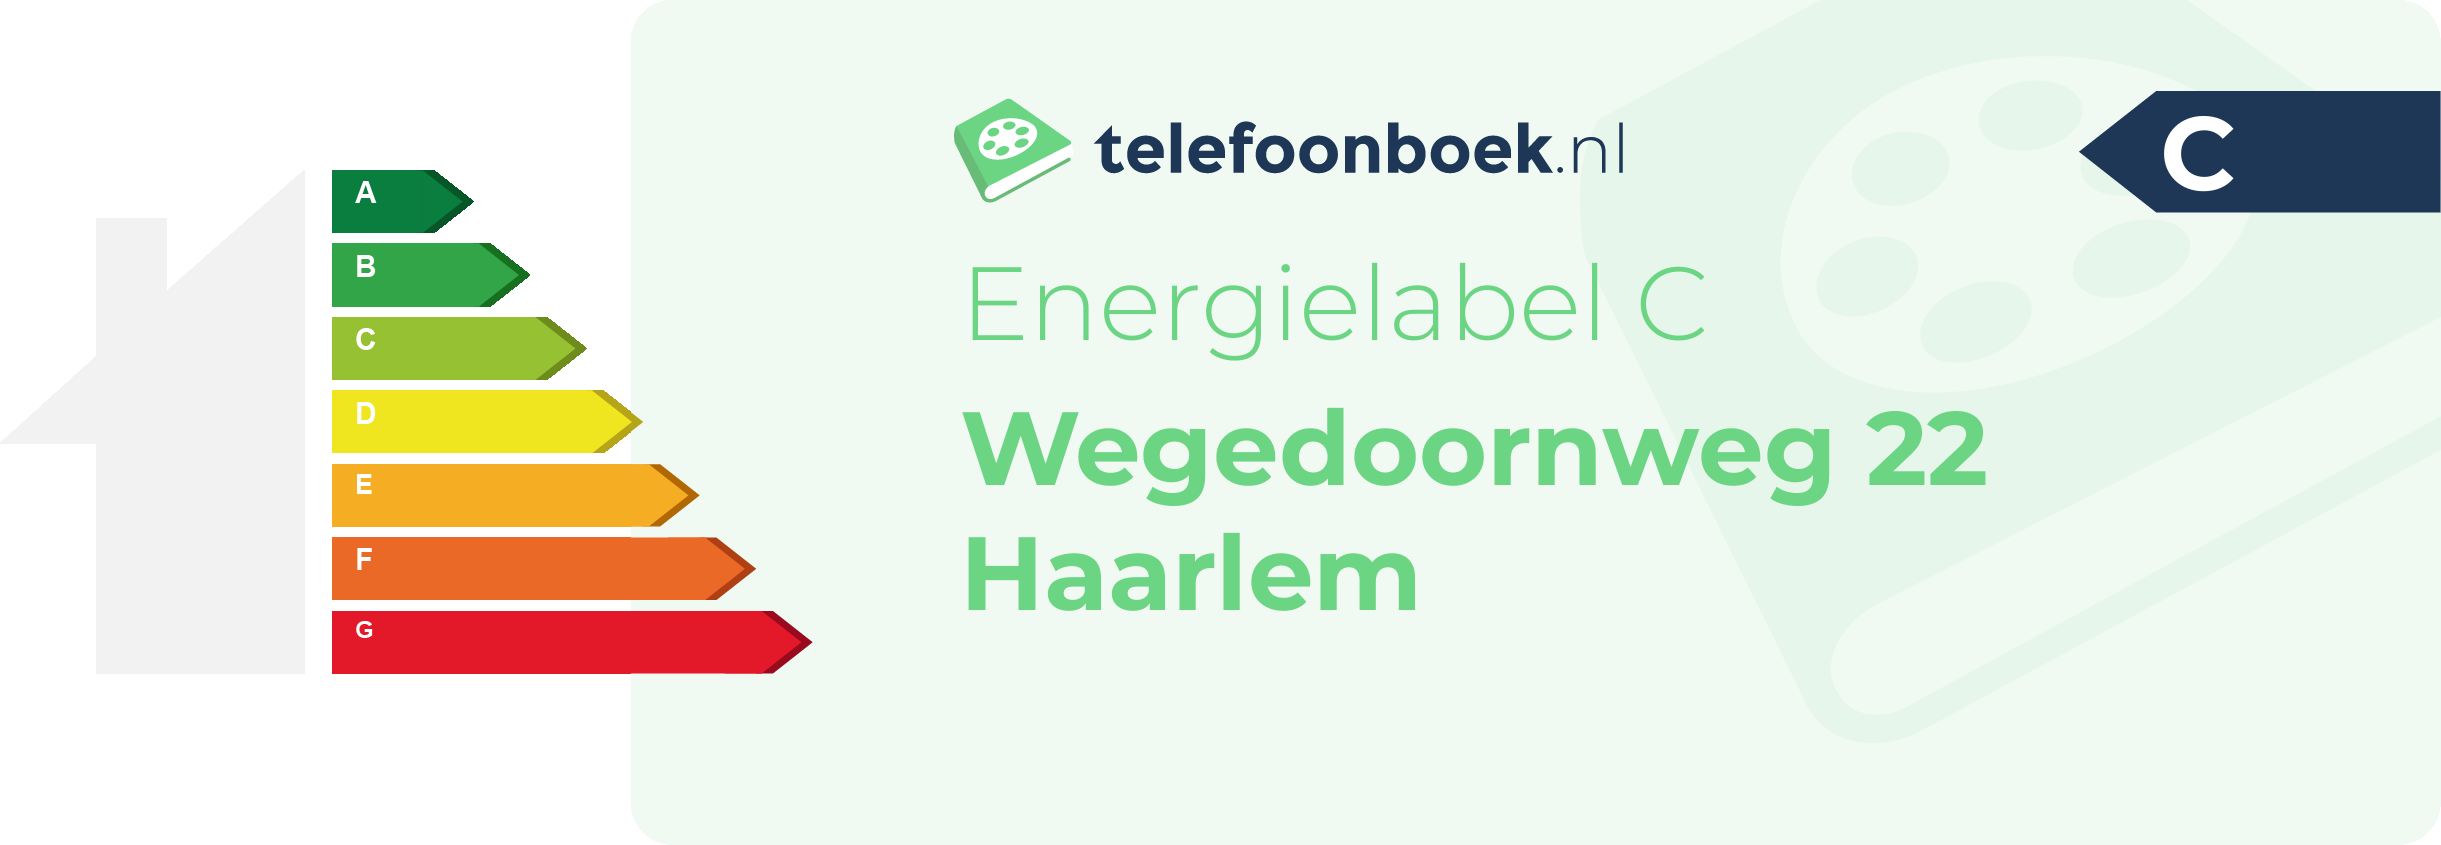 Energielabel Wegedoornweg 22 Haarlem